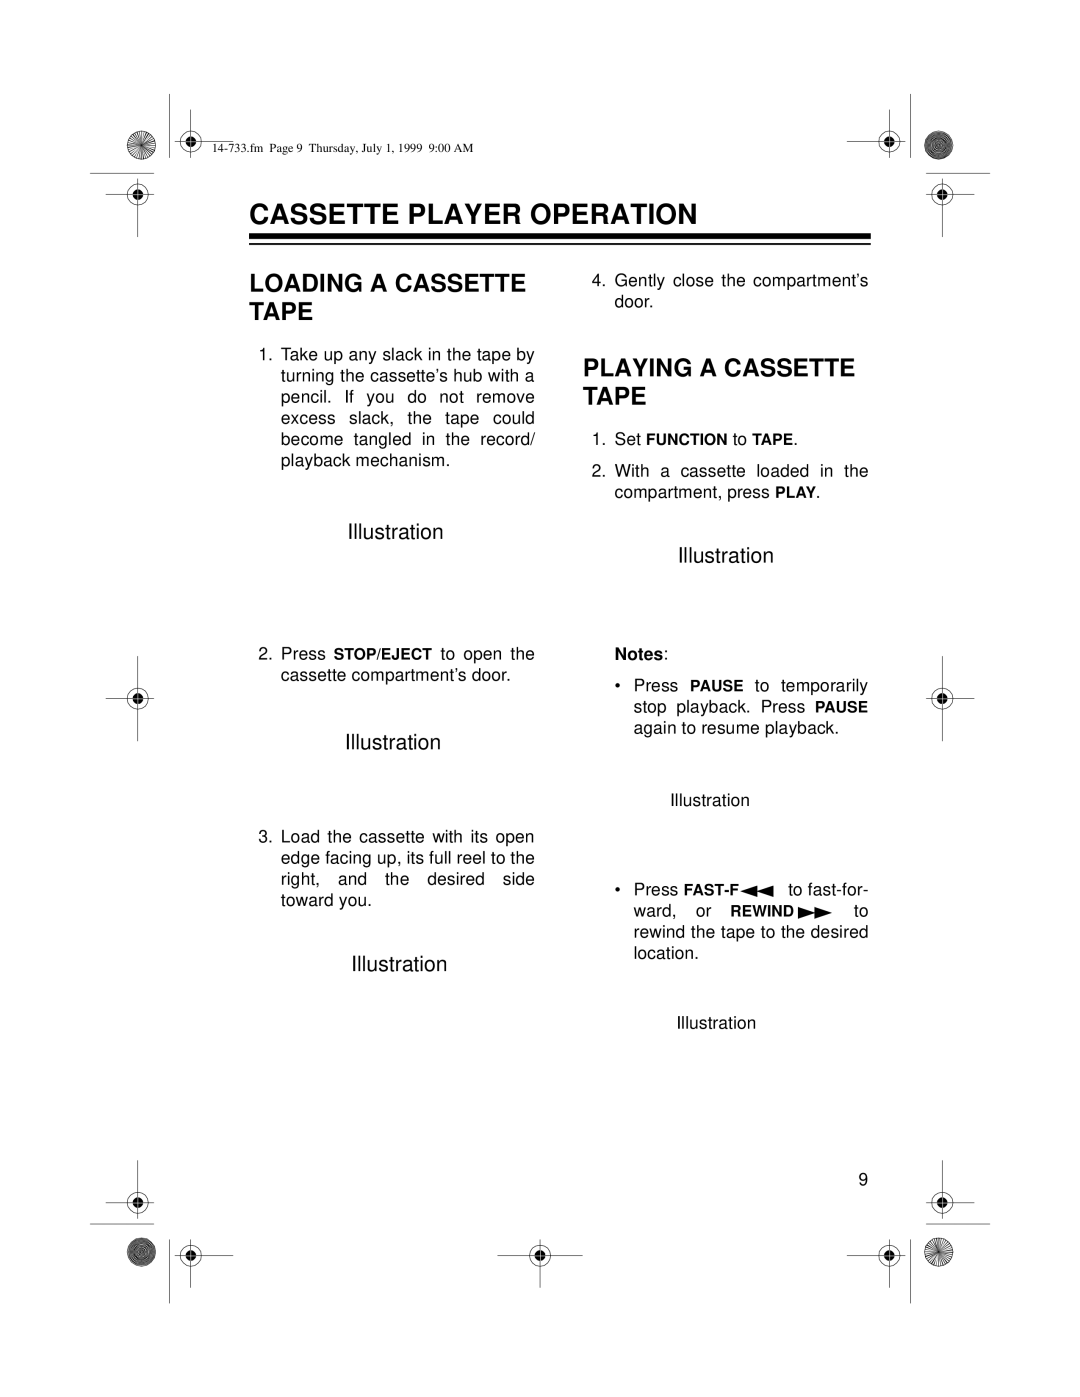 Optimus CTR-110 Cassette Player Operation, Loading A Cassette Tape, Playing A Cassette Tape, Illustration Illustration 